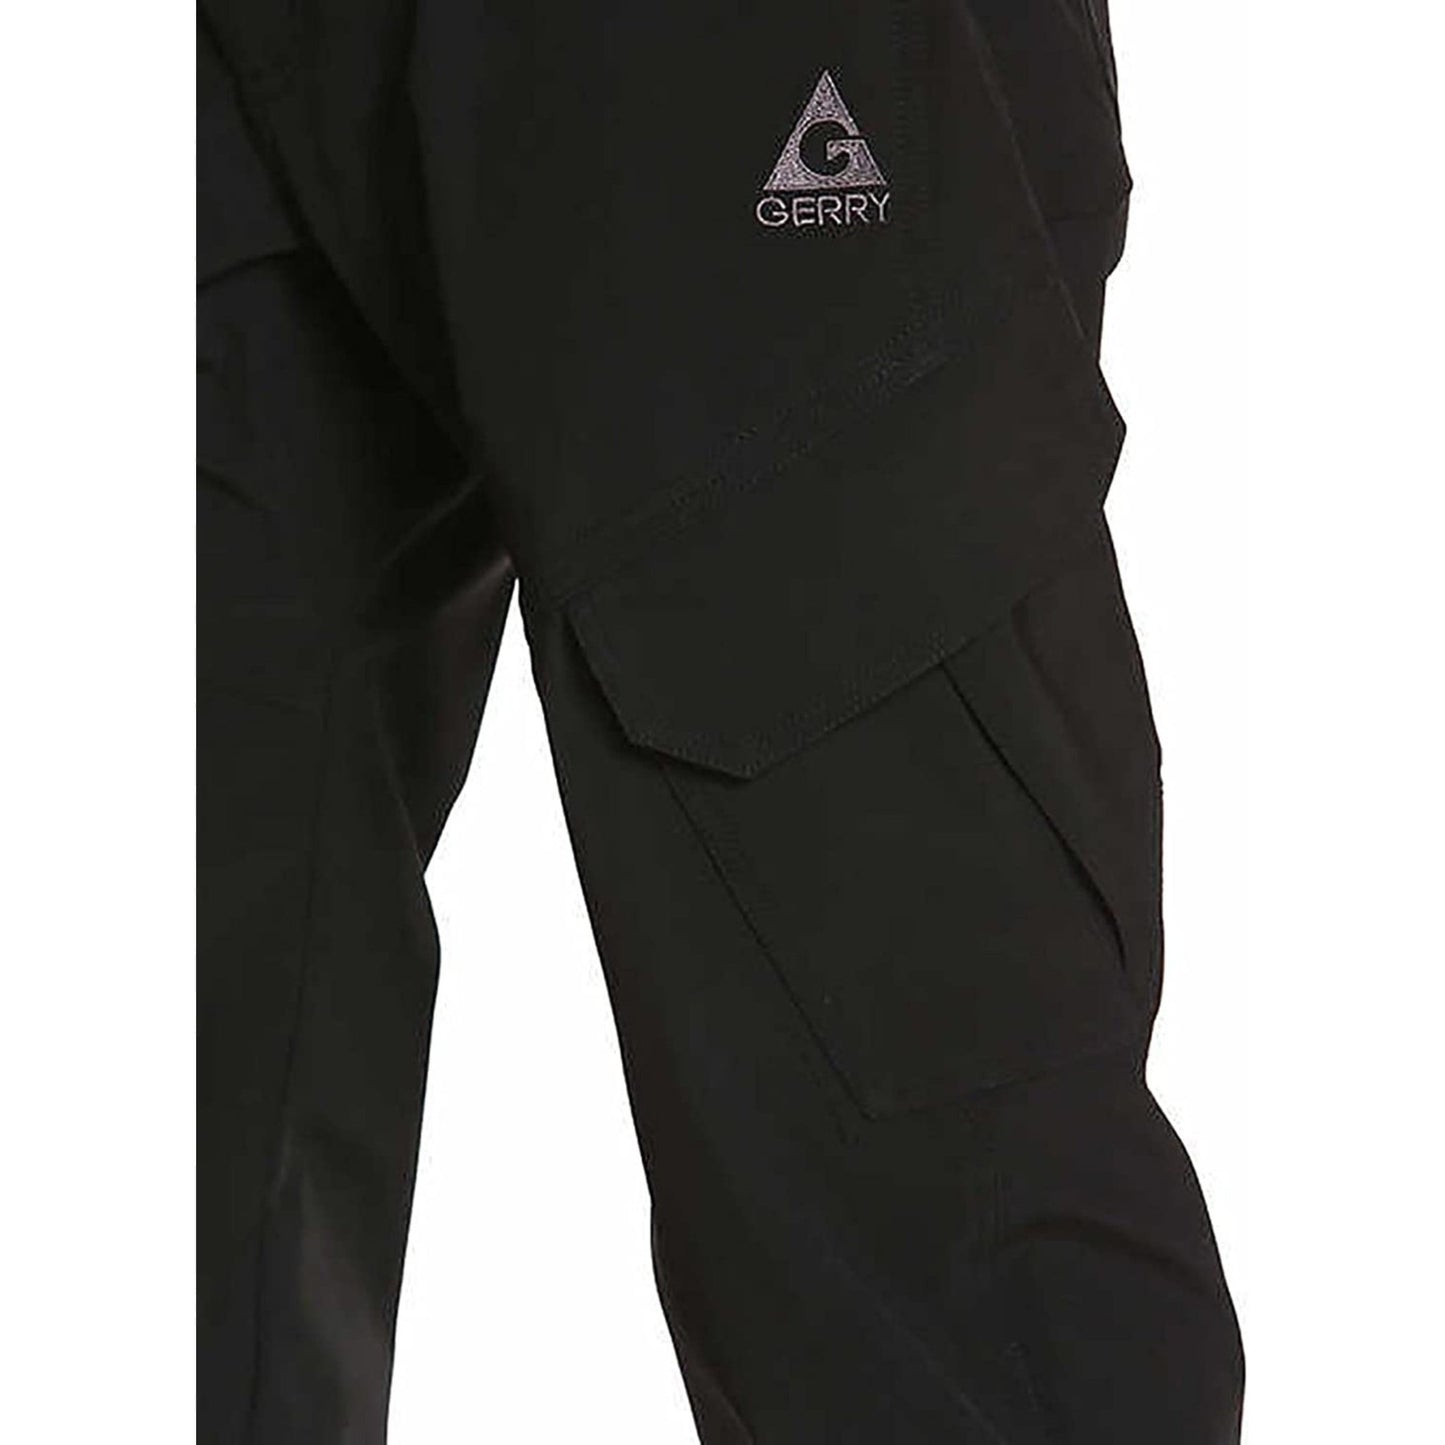 Cargo Pants for Men - Gerry Snow-Tech Boarder Ski Pant 4 Way Stretch pants